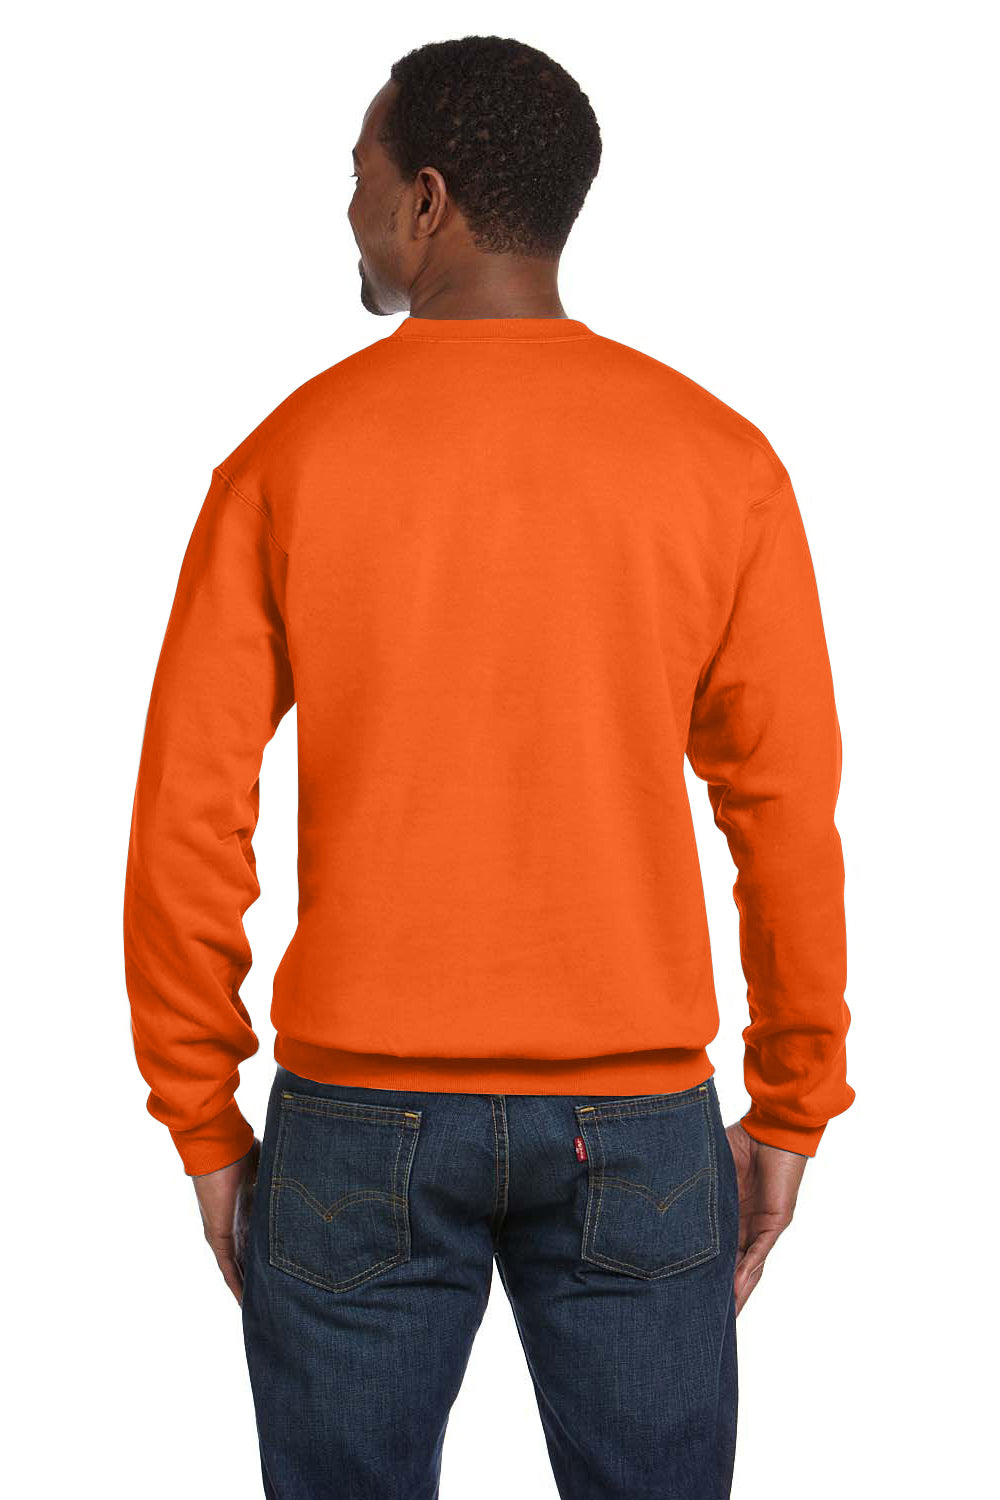 Hanes P160 EcoSmart Print Pro XP Fleece Crewneck Sweatshirt Orange Back